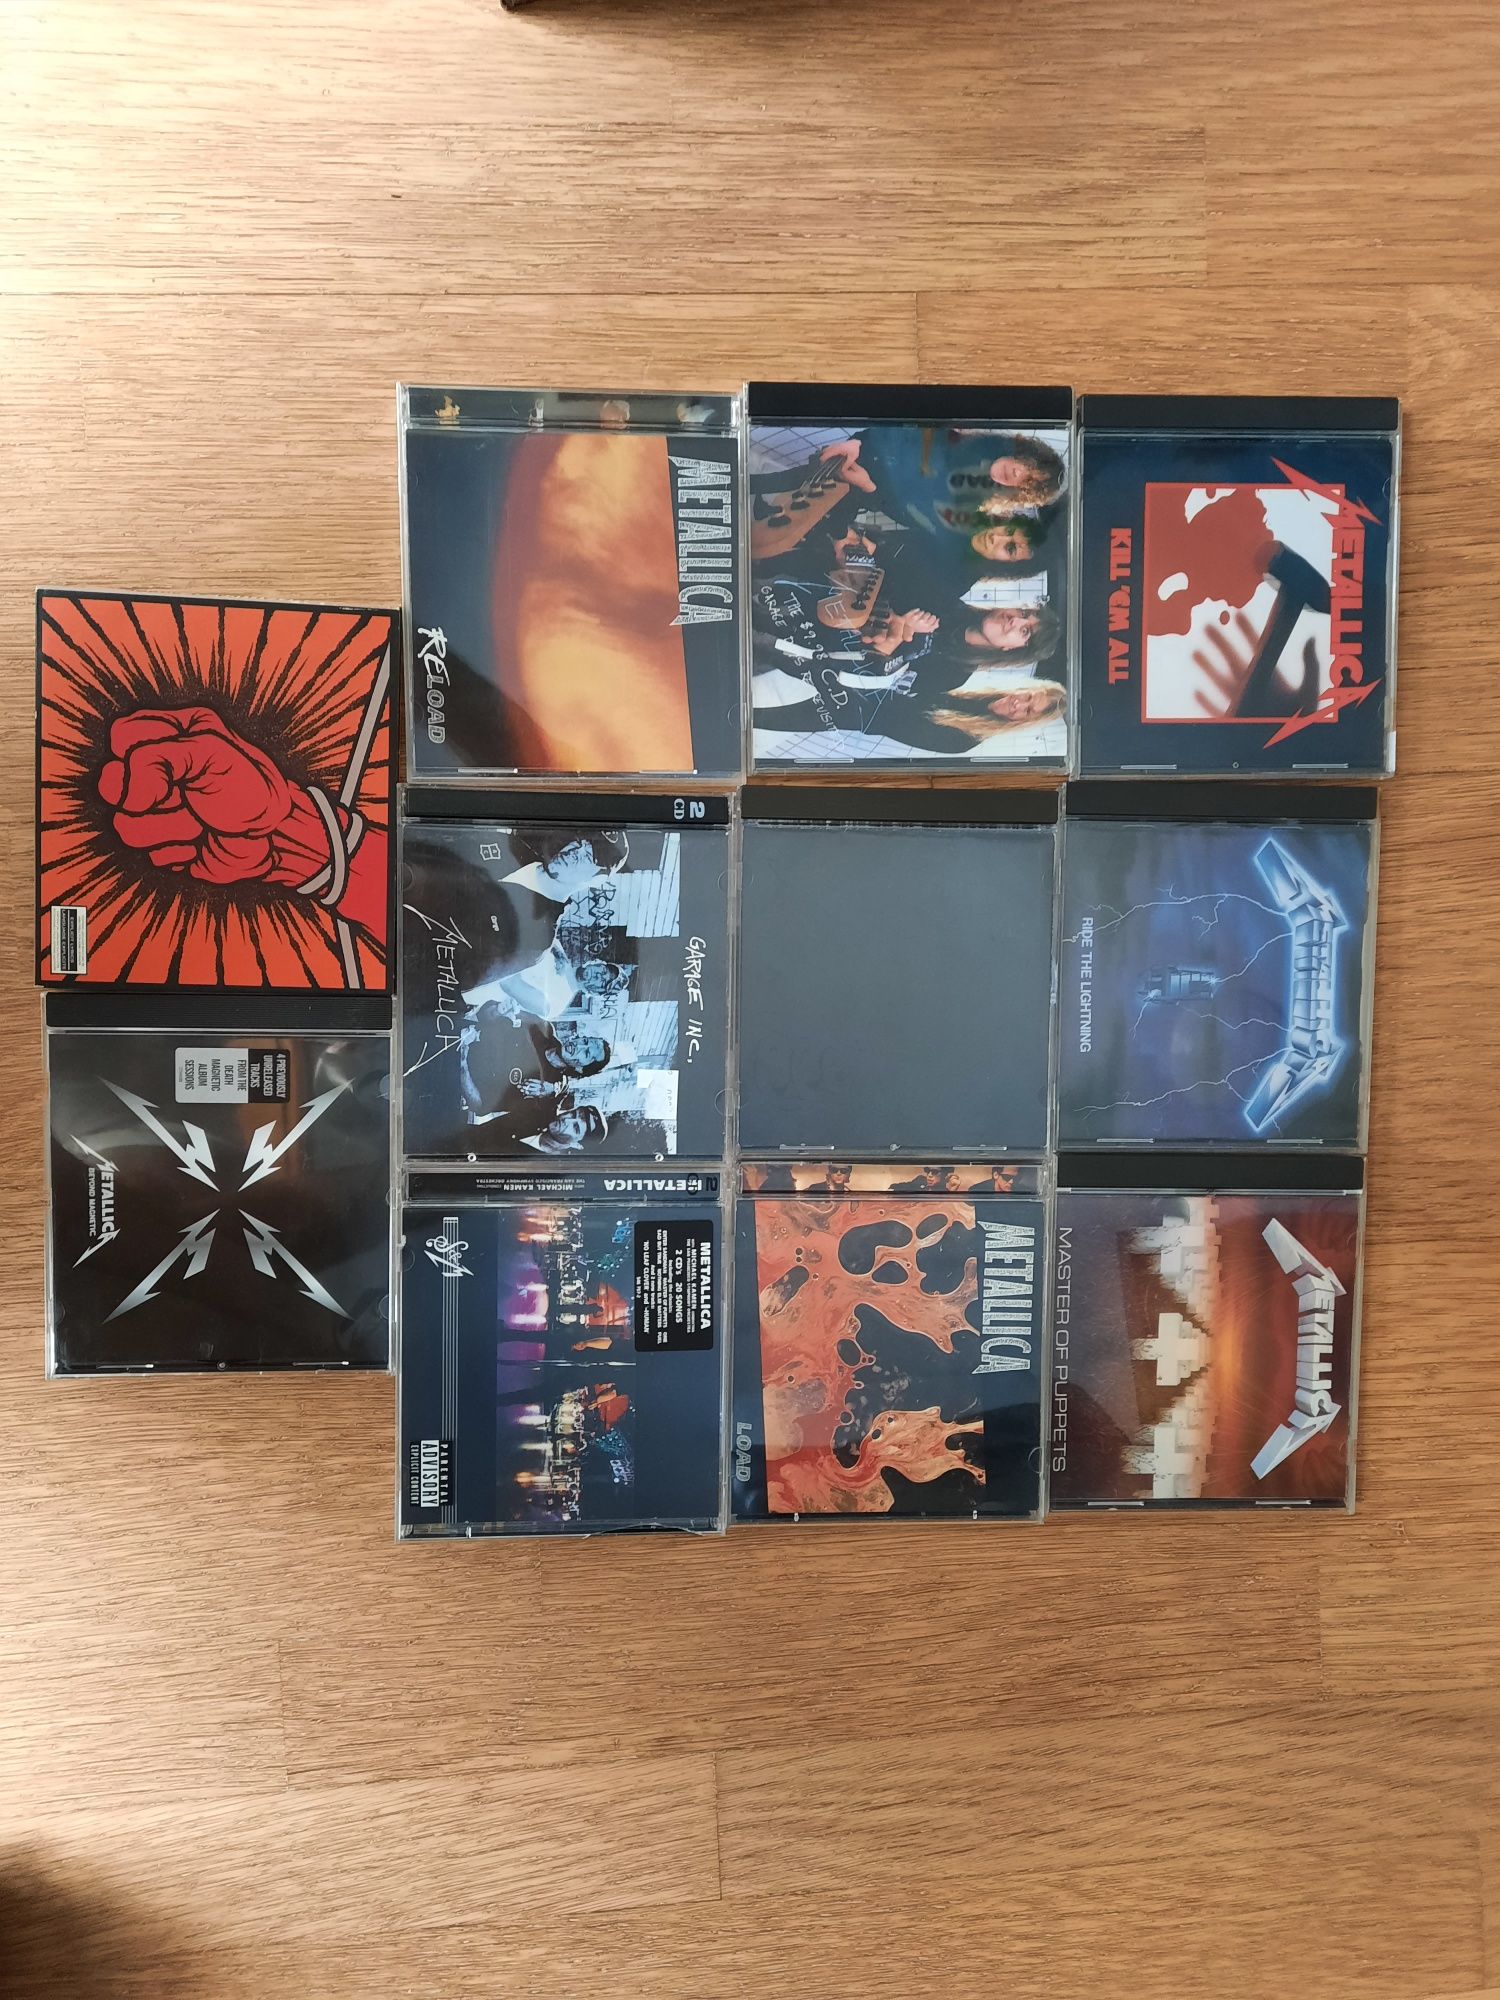 CDS dvds Metallica megadeth sepultura cavalera conspiracy metal CD dvd